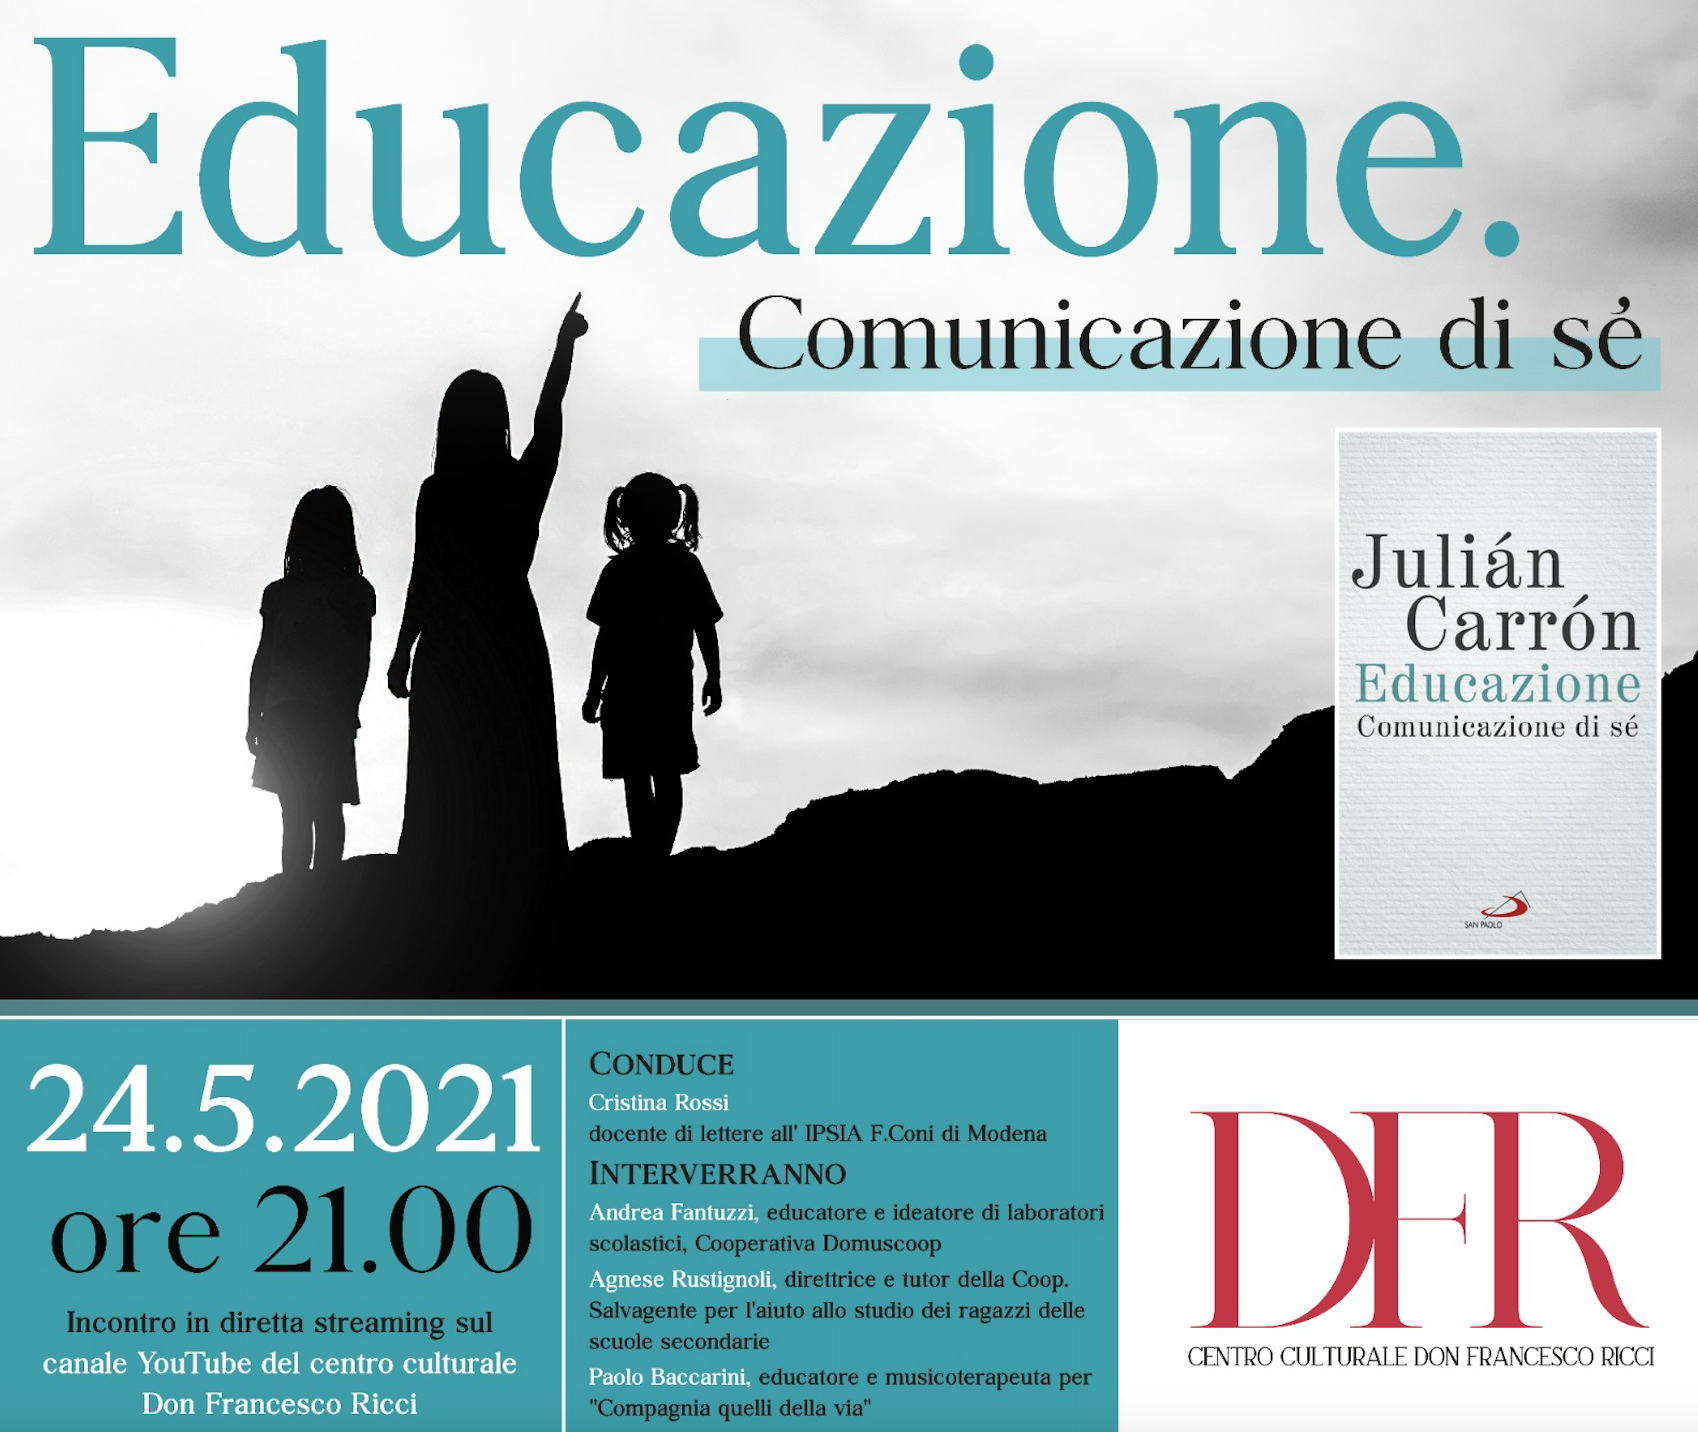 Featured image for “Forlì: Educazione. Comunicazione di sè”